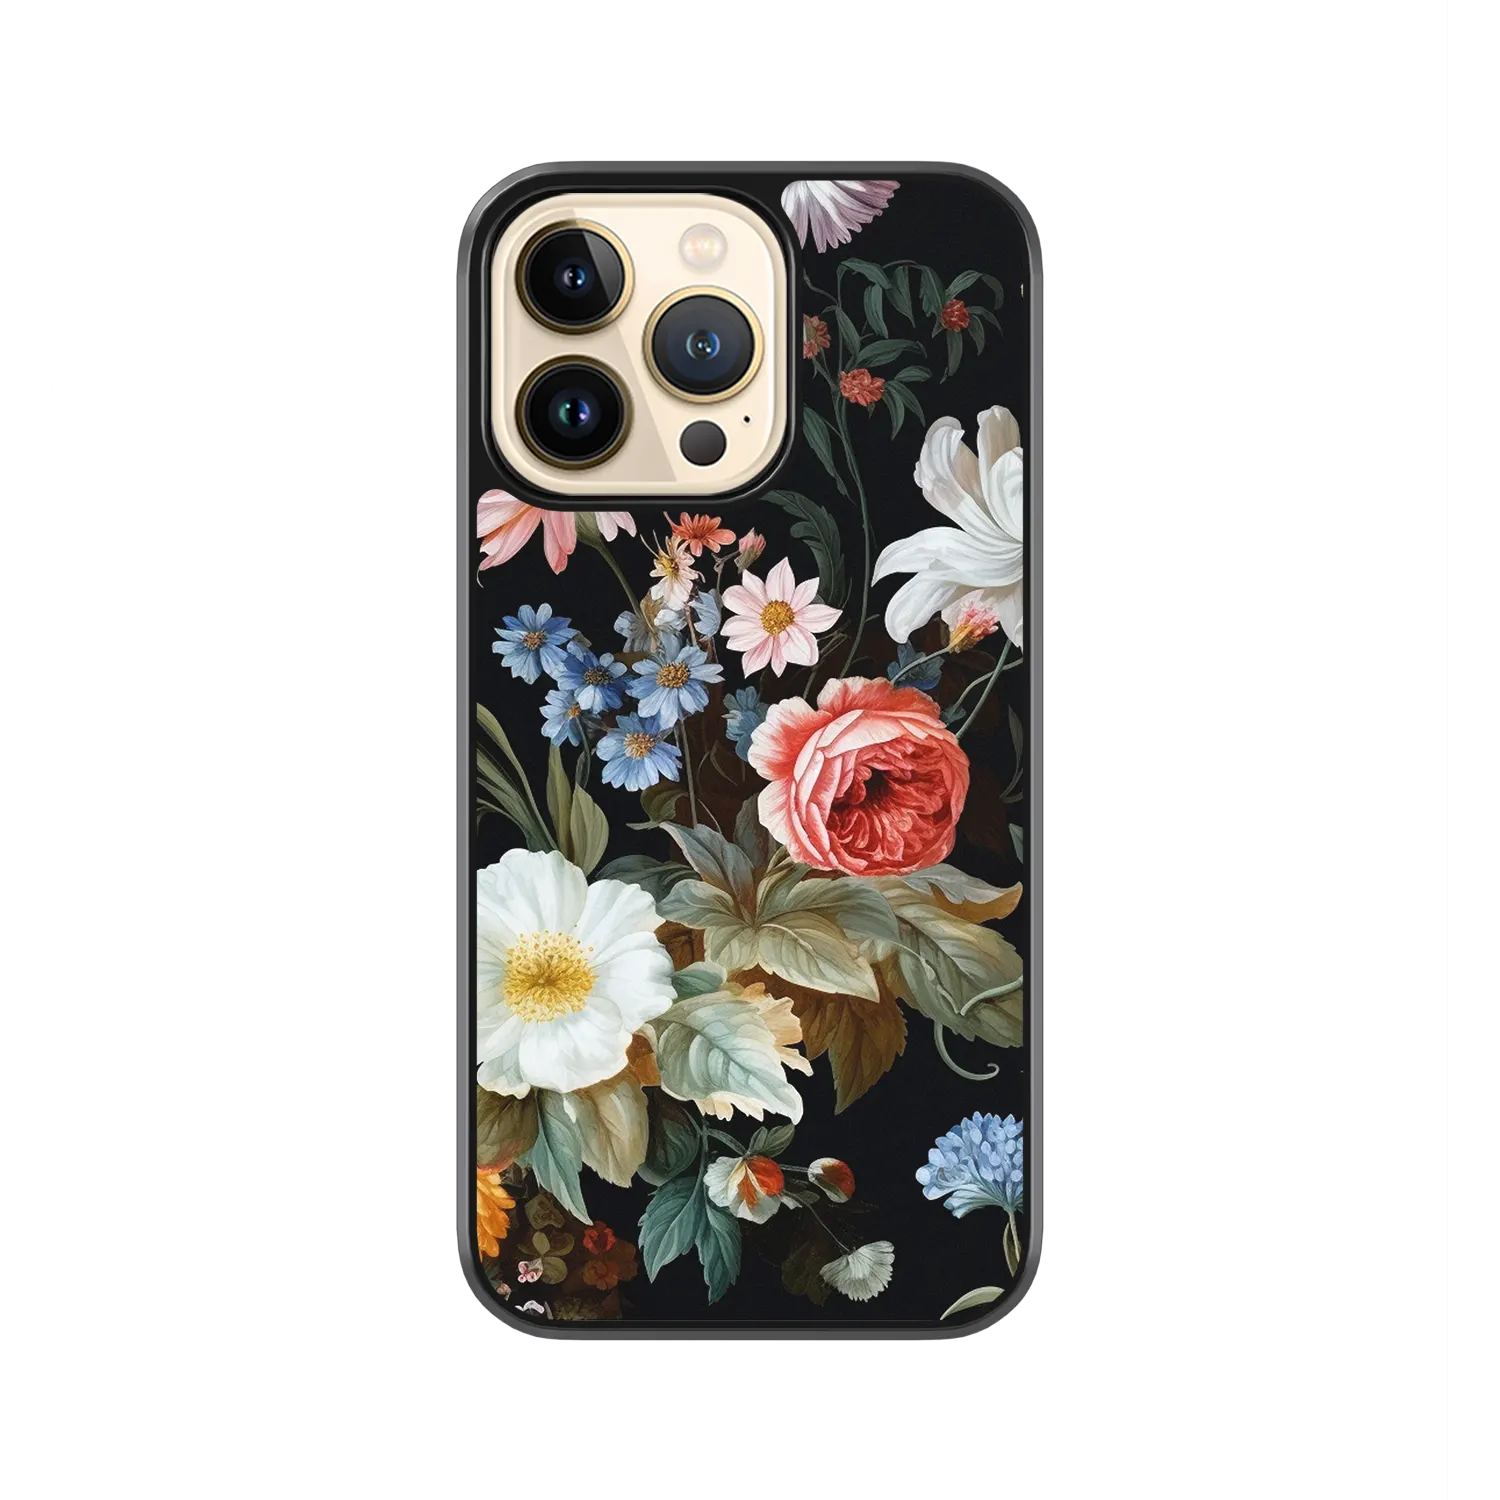 Lush-Gardens-iPhone-12-Pro-max-Case